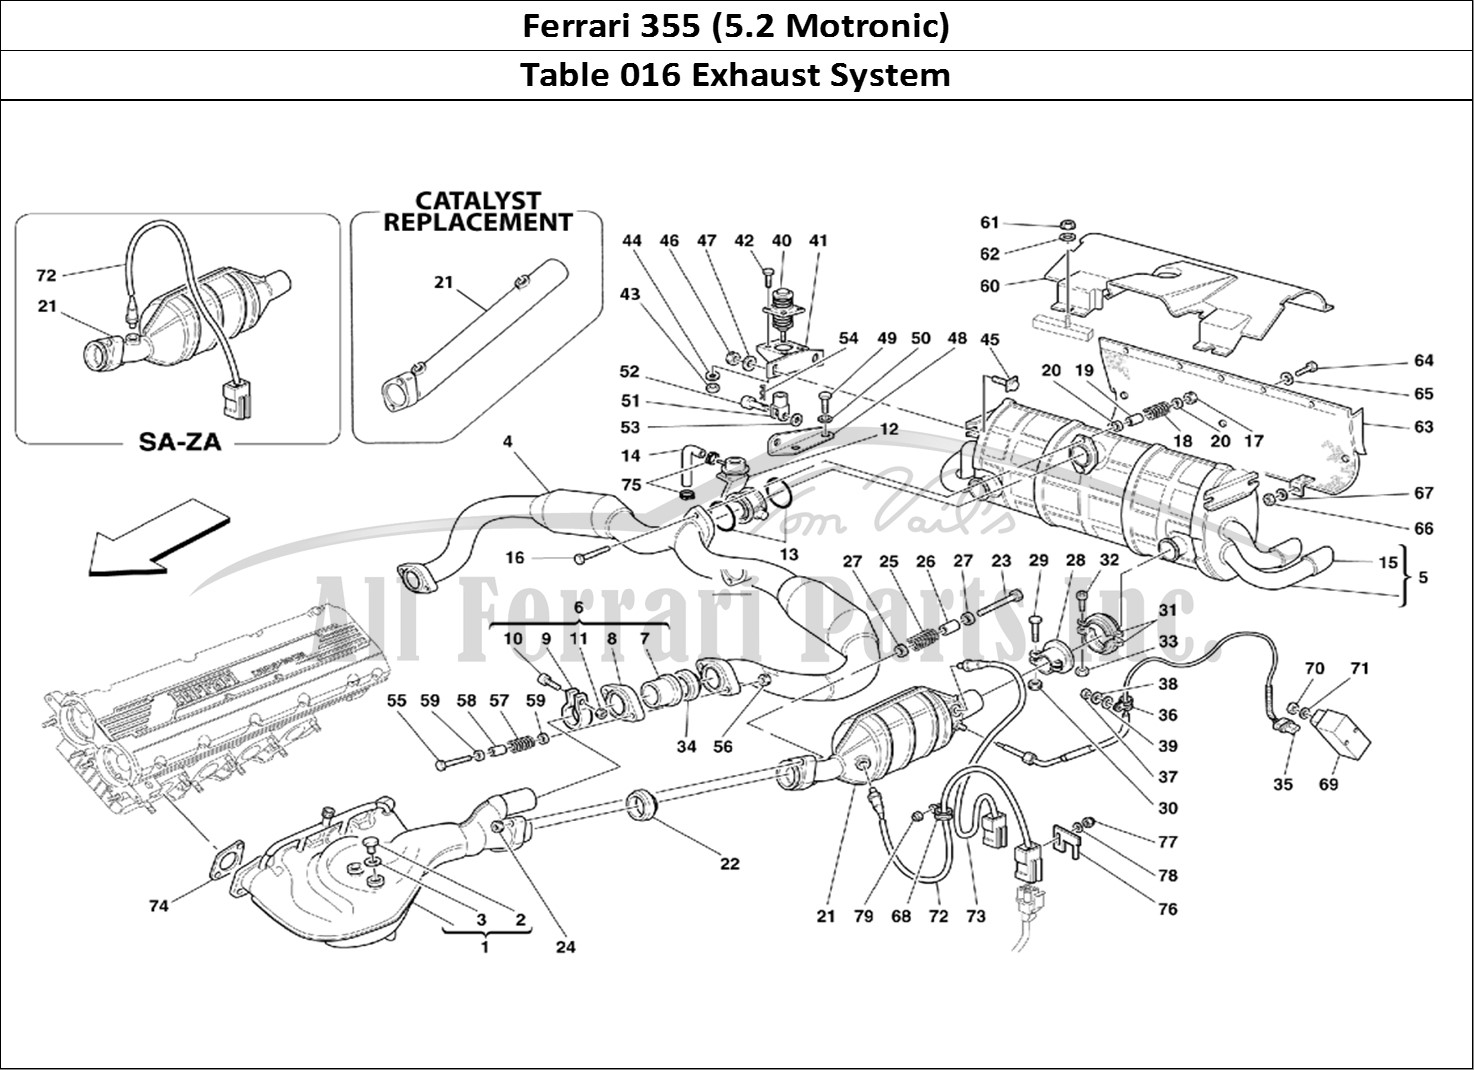 Ferrari Parts Ferrari 355 (5.2 Motronic) Page 016 Exhaust System